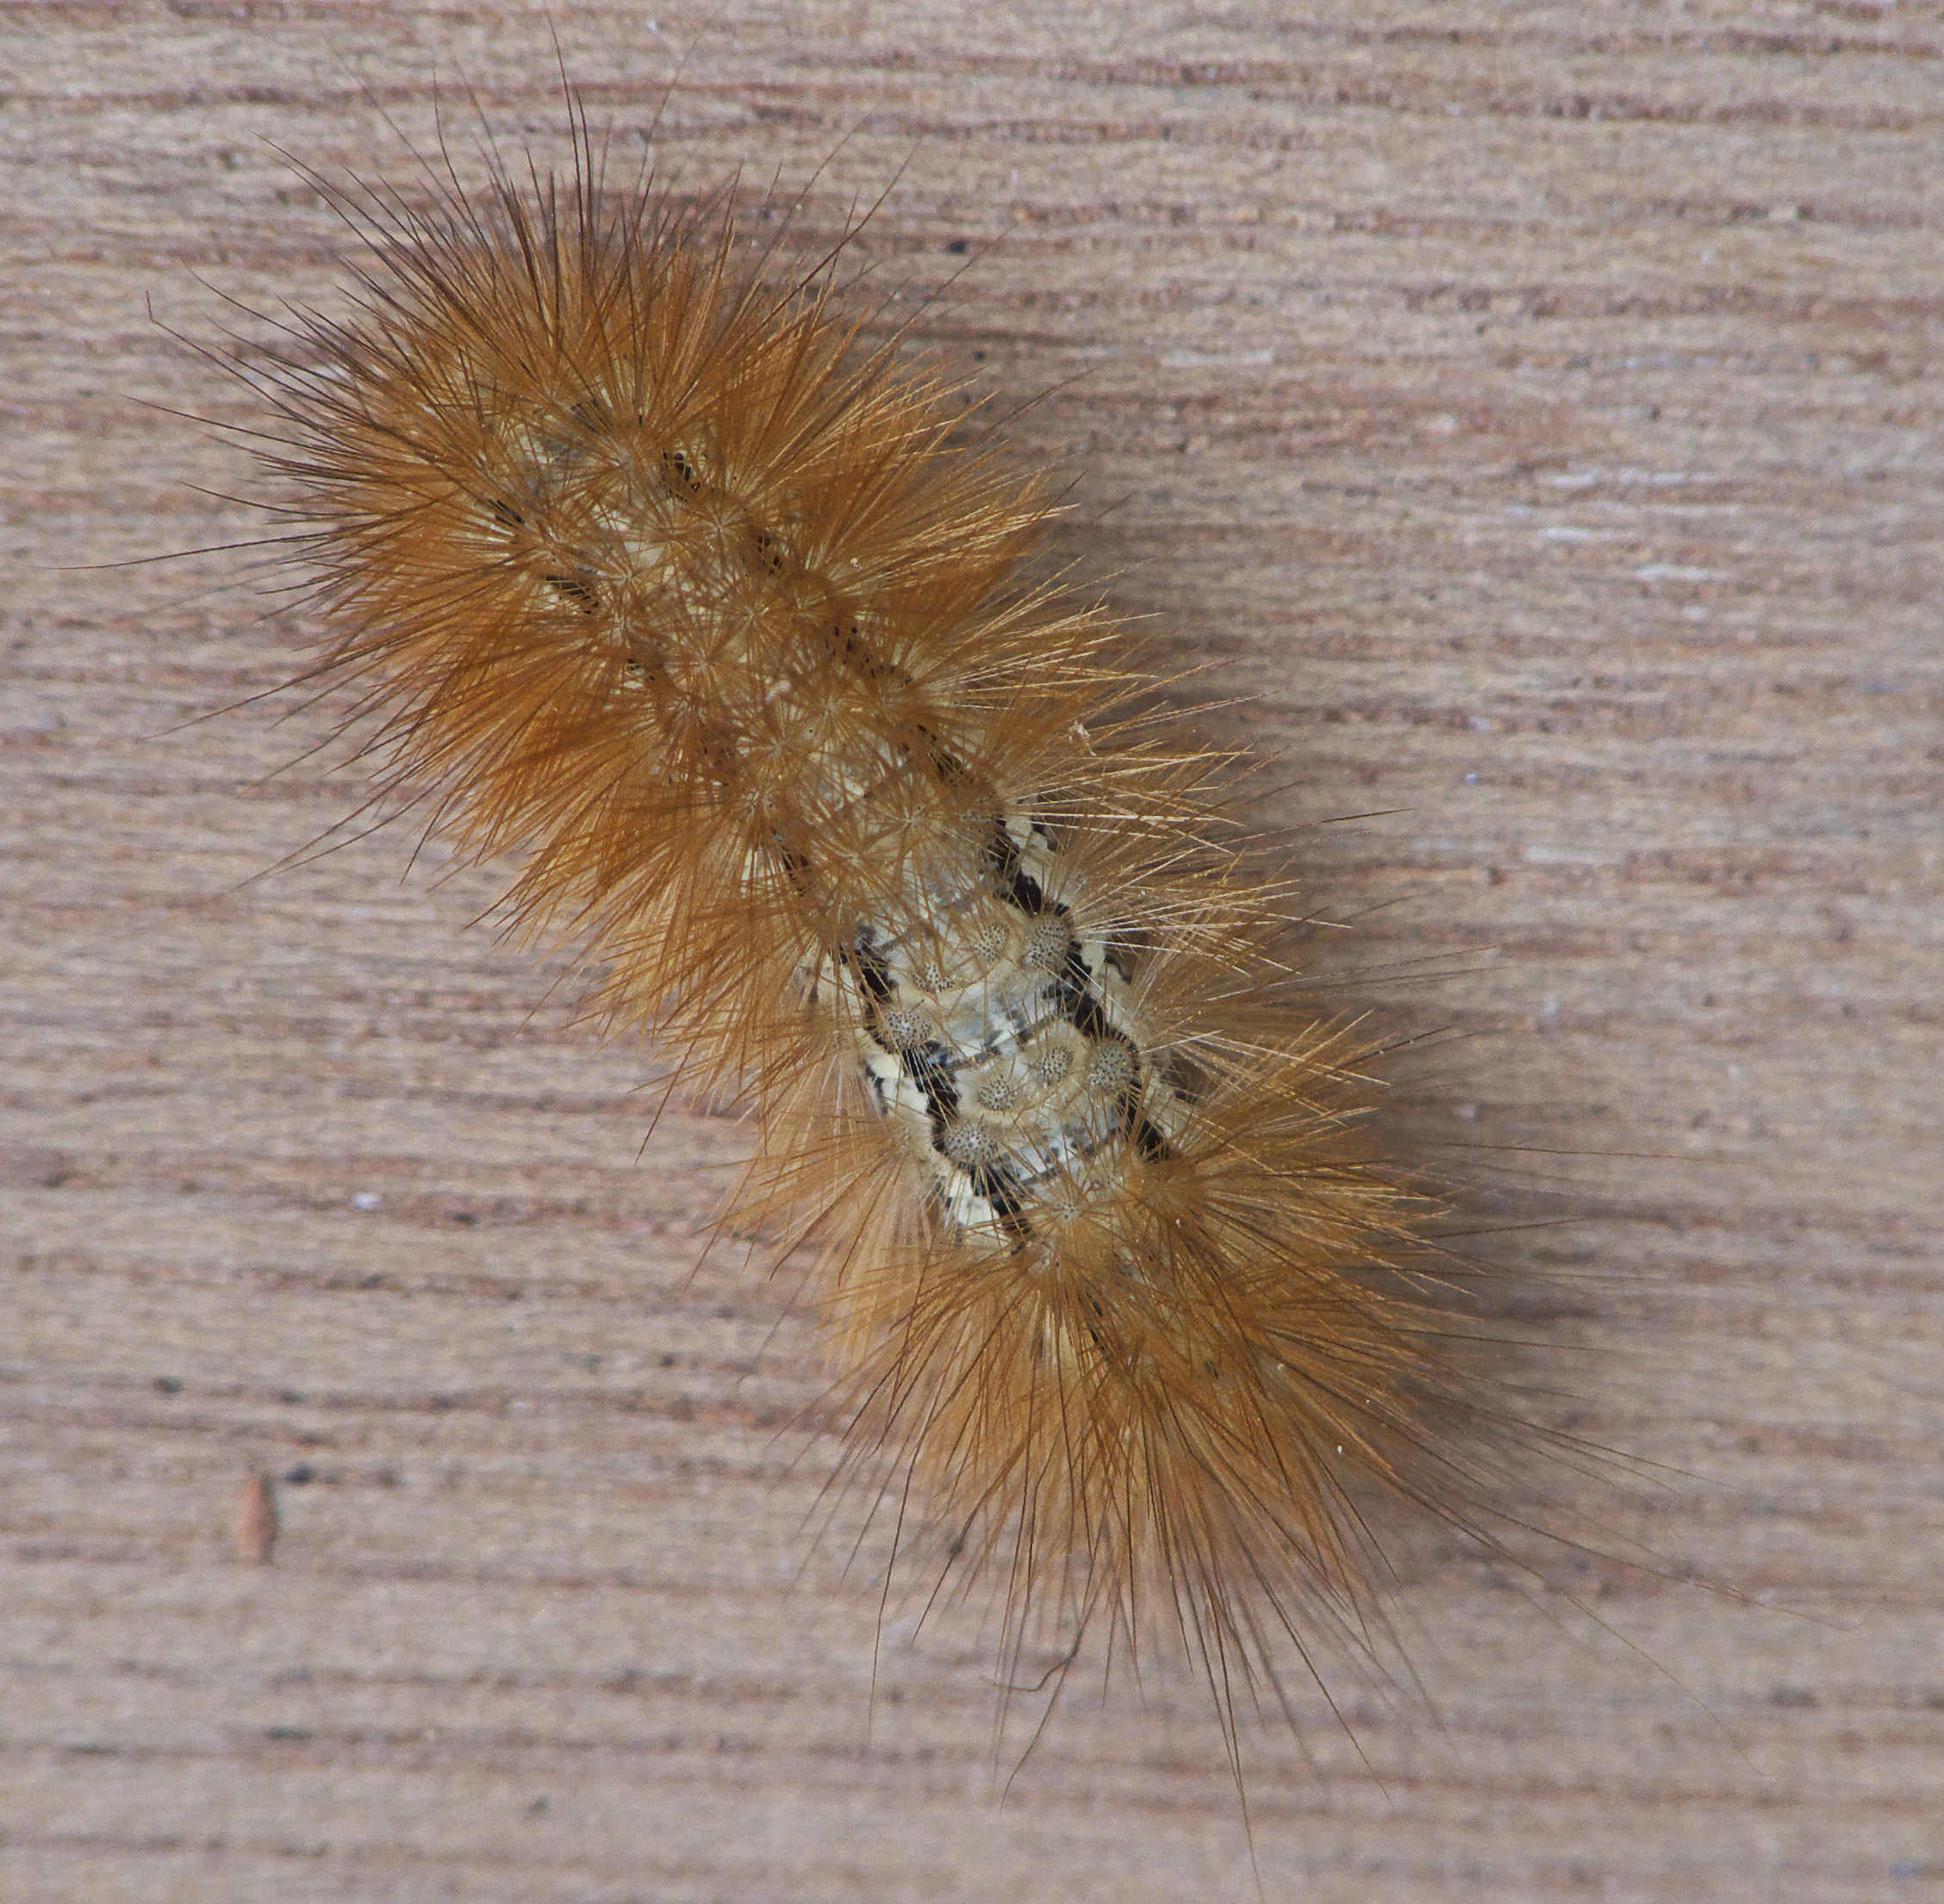 houten Dreigend Prestatie File:Spilosoma lutea caterpillar, gele tijger rups.jpg - Wikimedia Commons